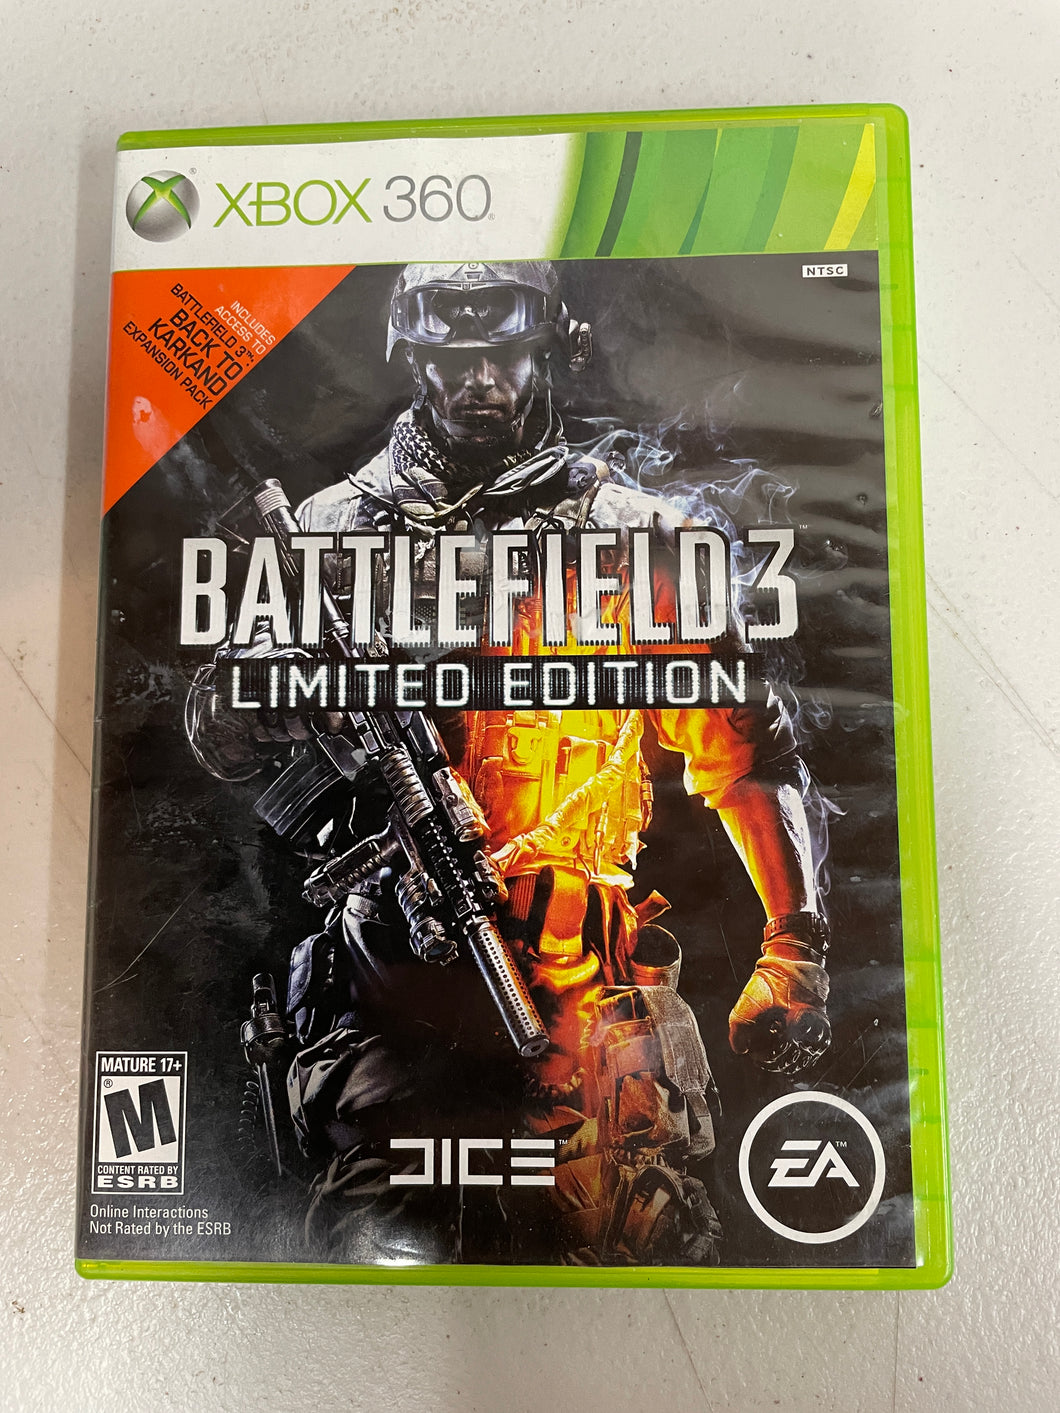 Battlefield 3 [Limited Edition] Xbox 360